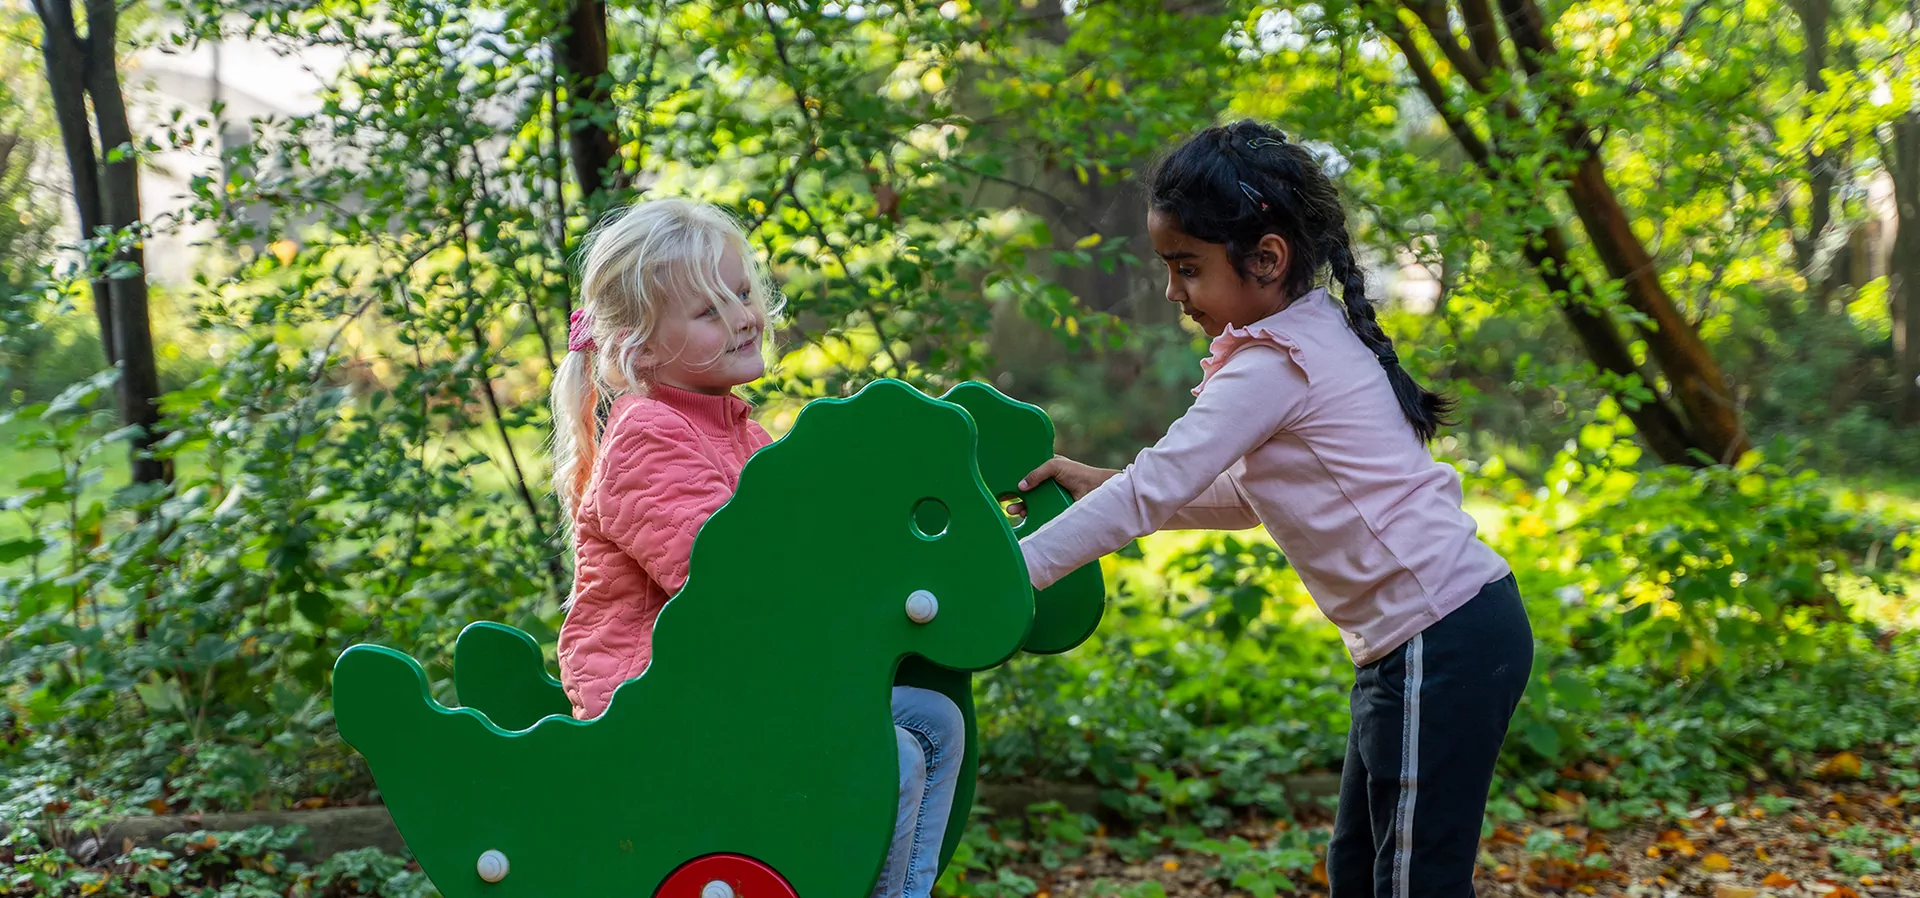 hero of girls playing on a dinosaur shaped playground spring rider